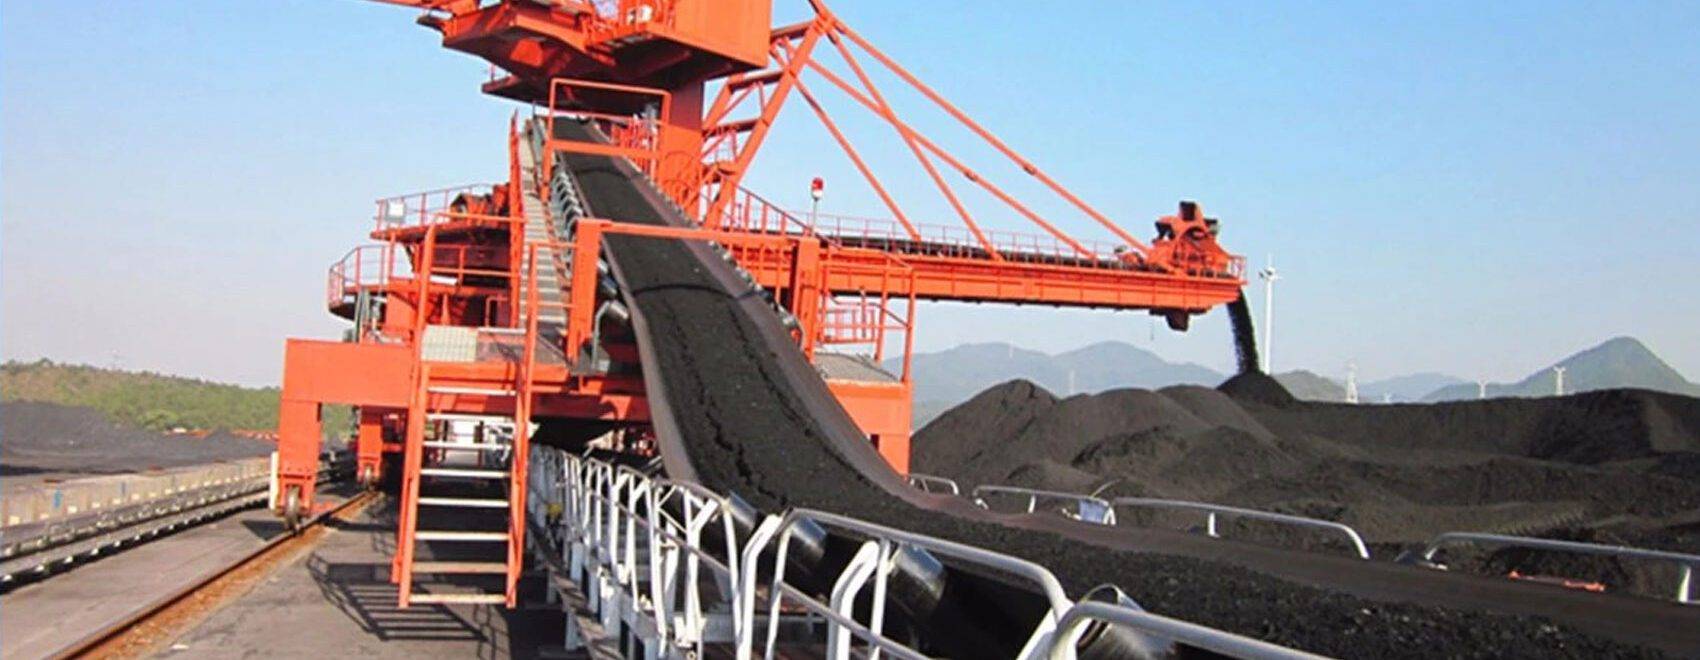 coal mining operations